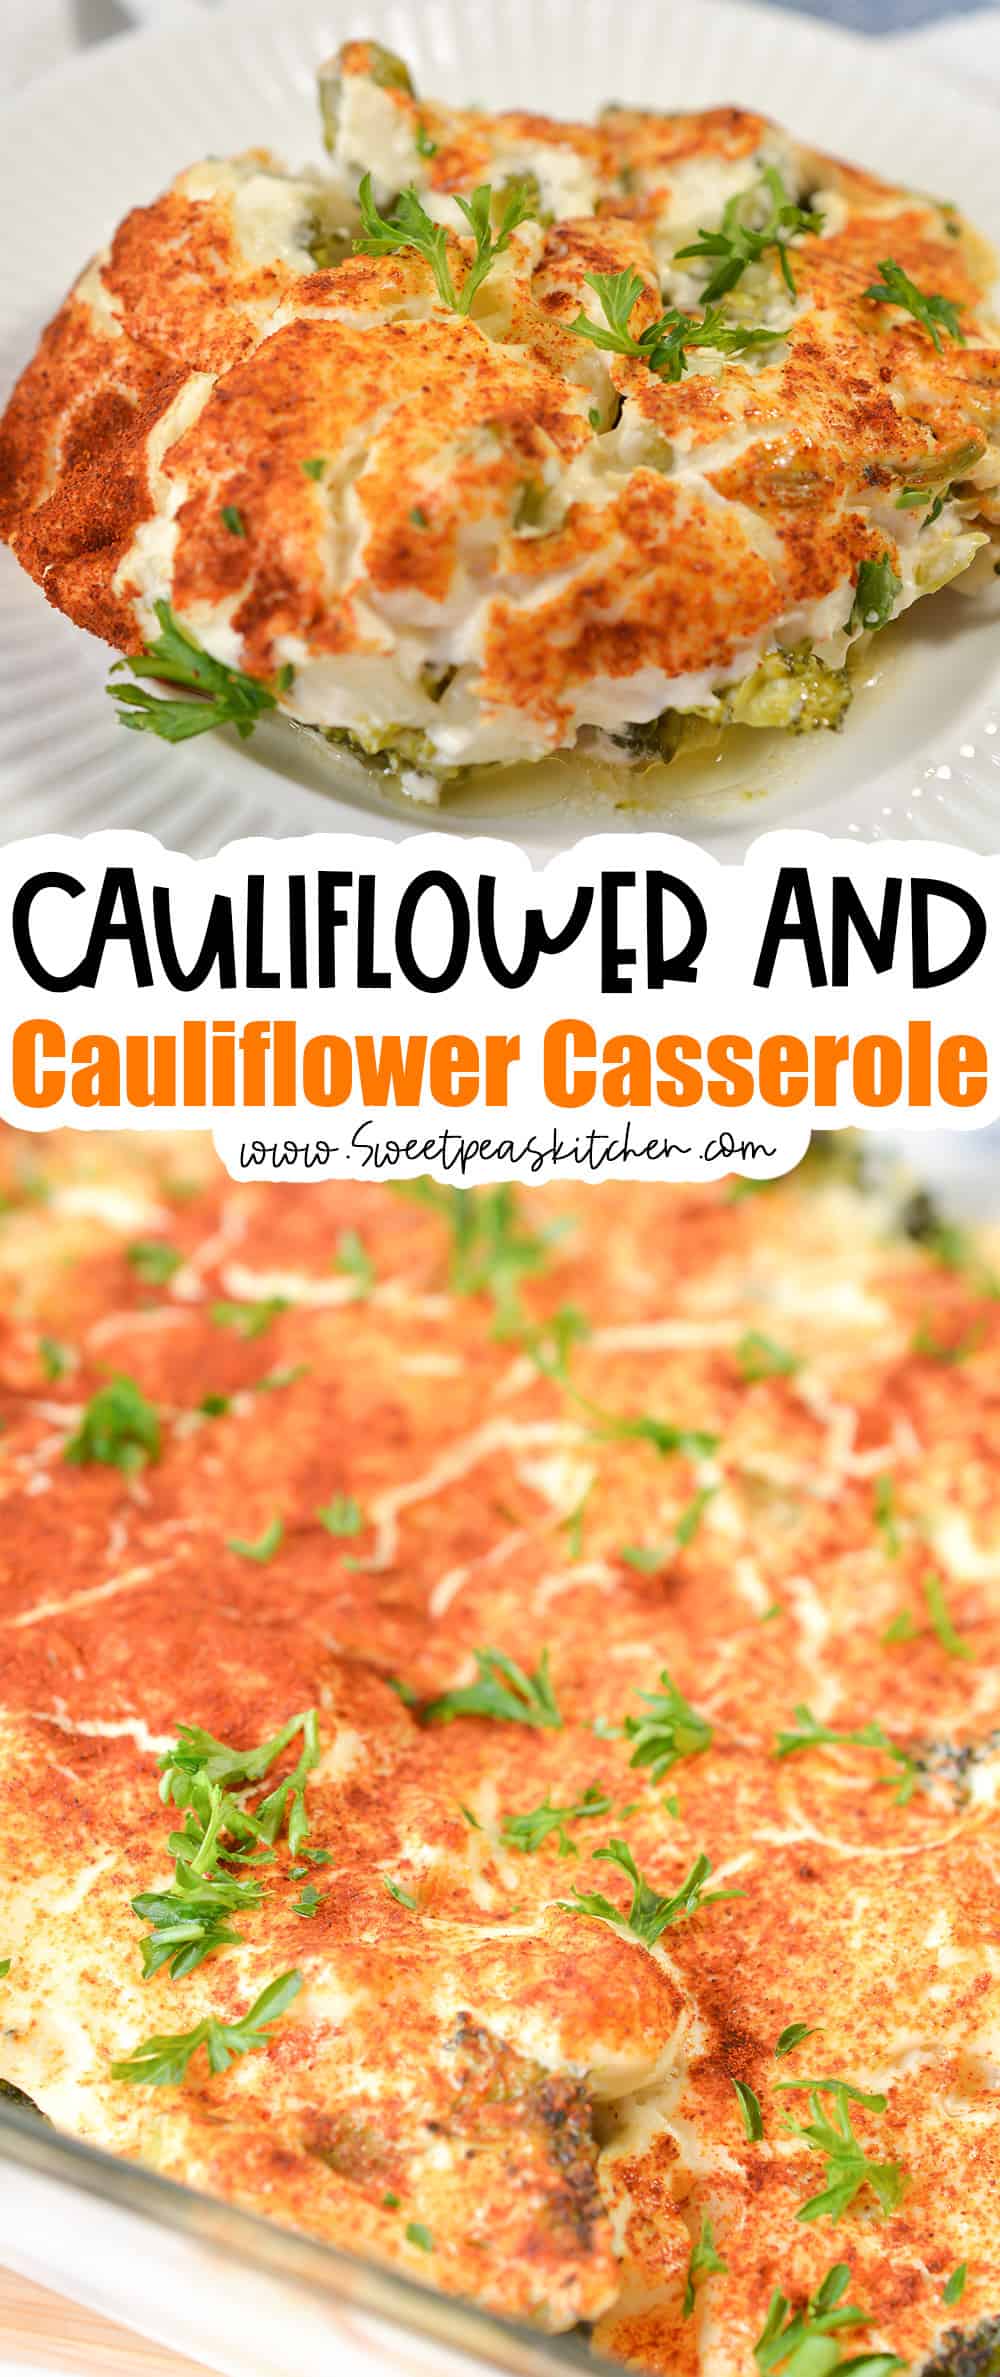 Cauliflower and Broccoli Casserole